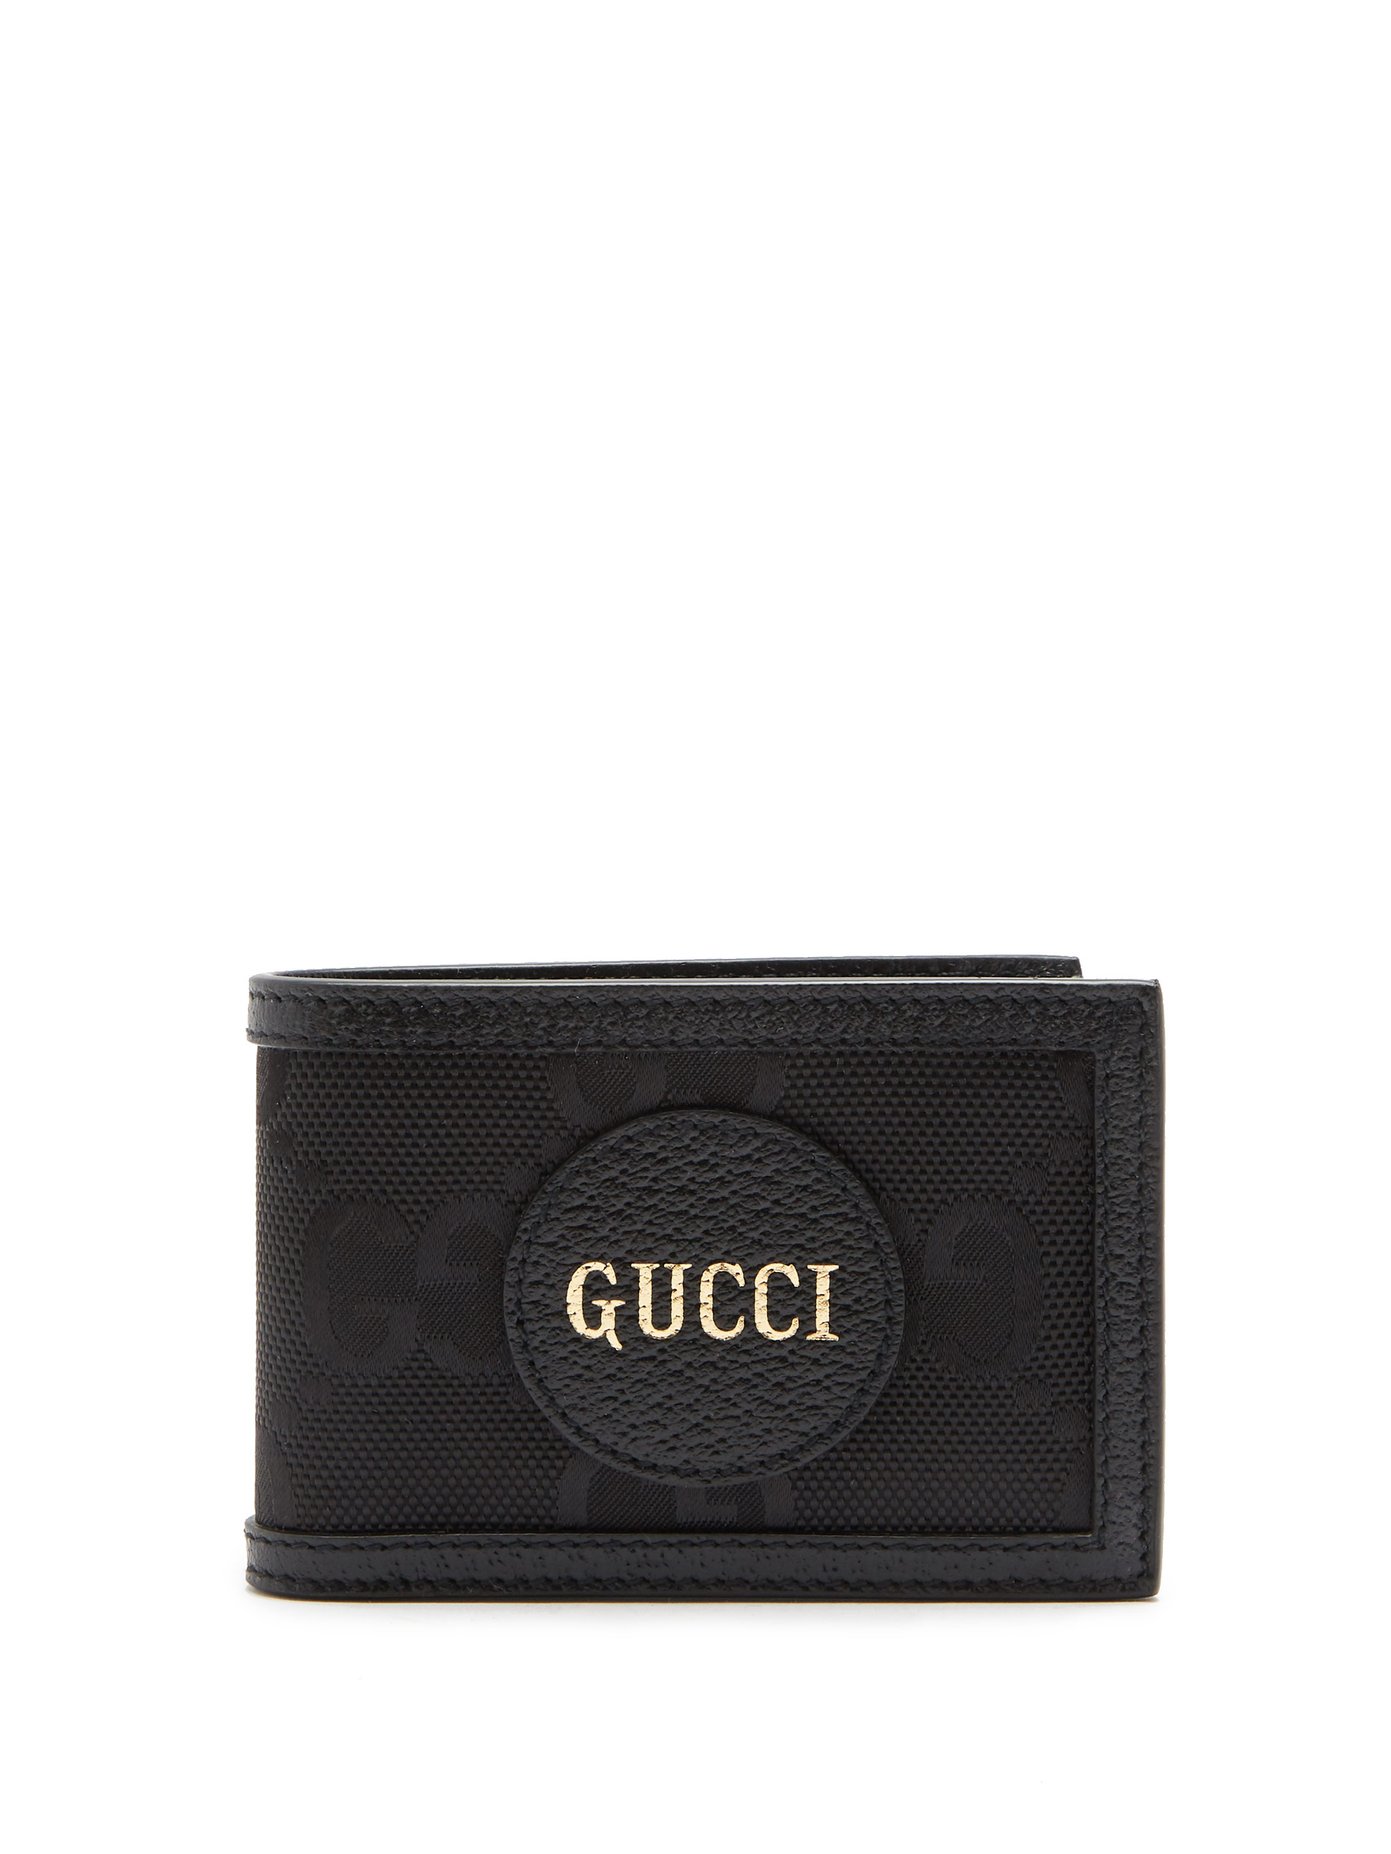 gucci small wallet